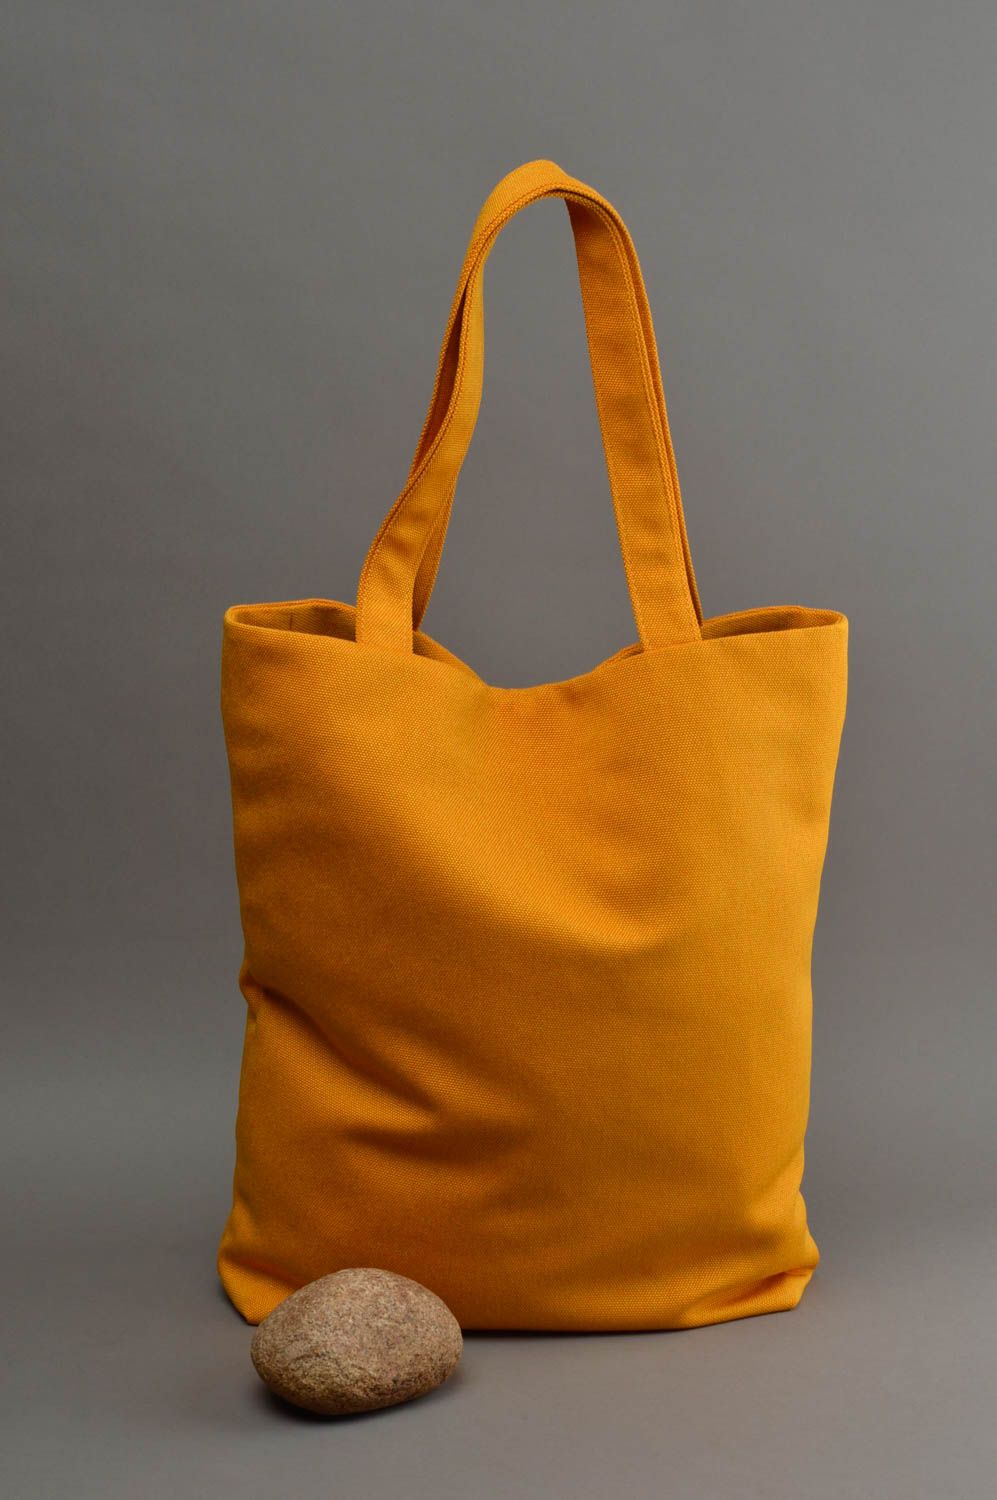 Big bag handmade fabric handbag bright orange designer purse gift for her photo 1